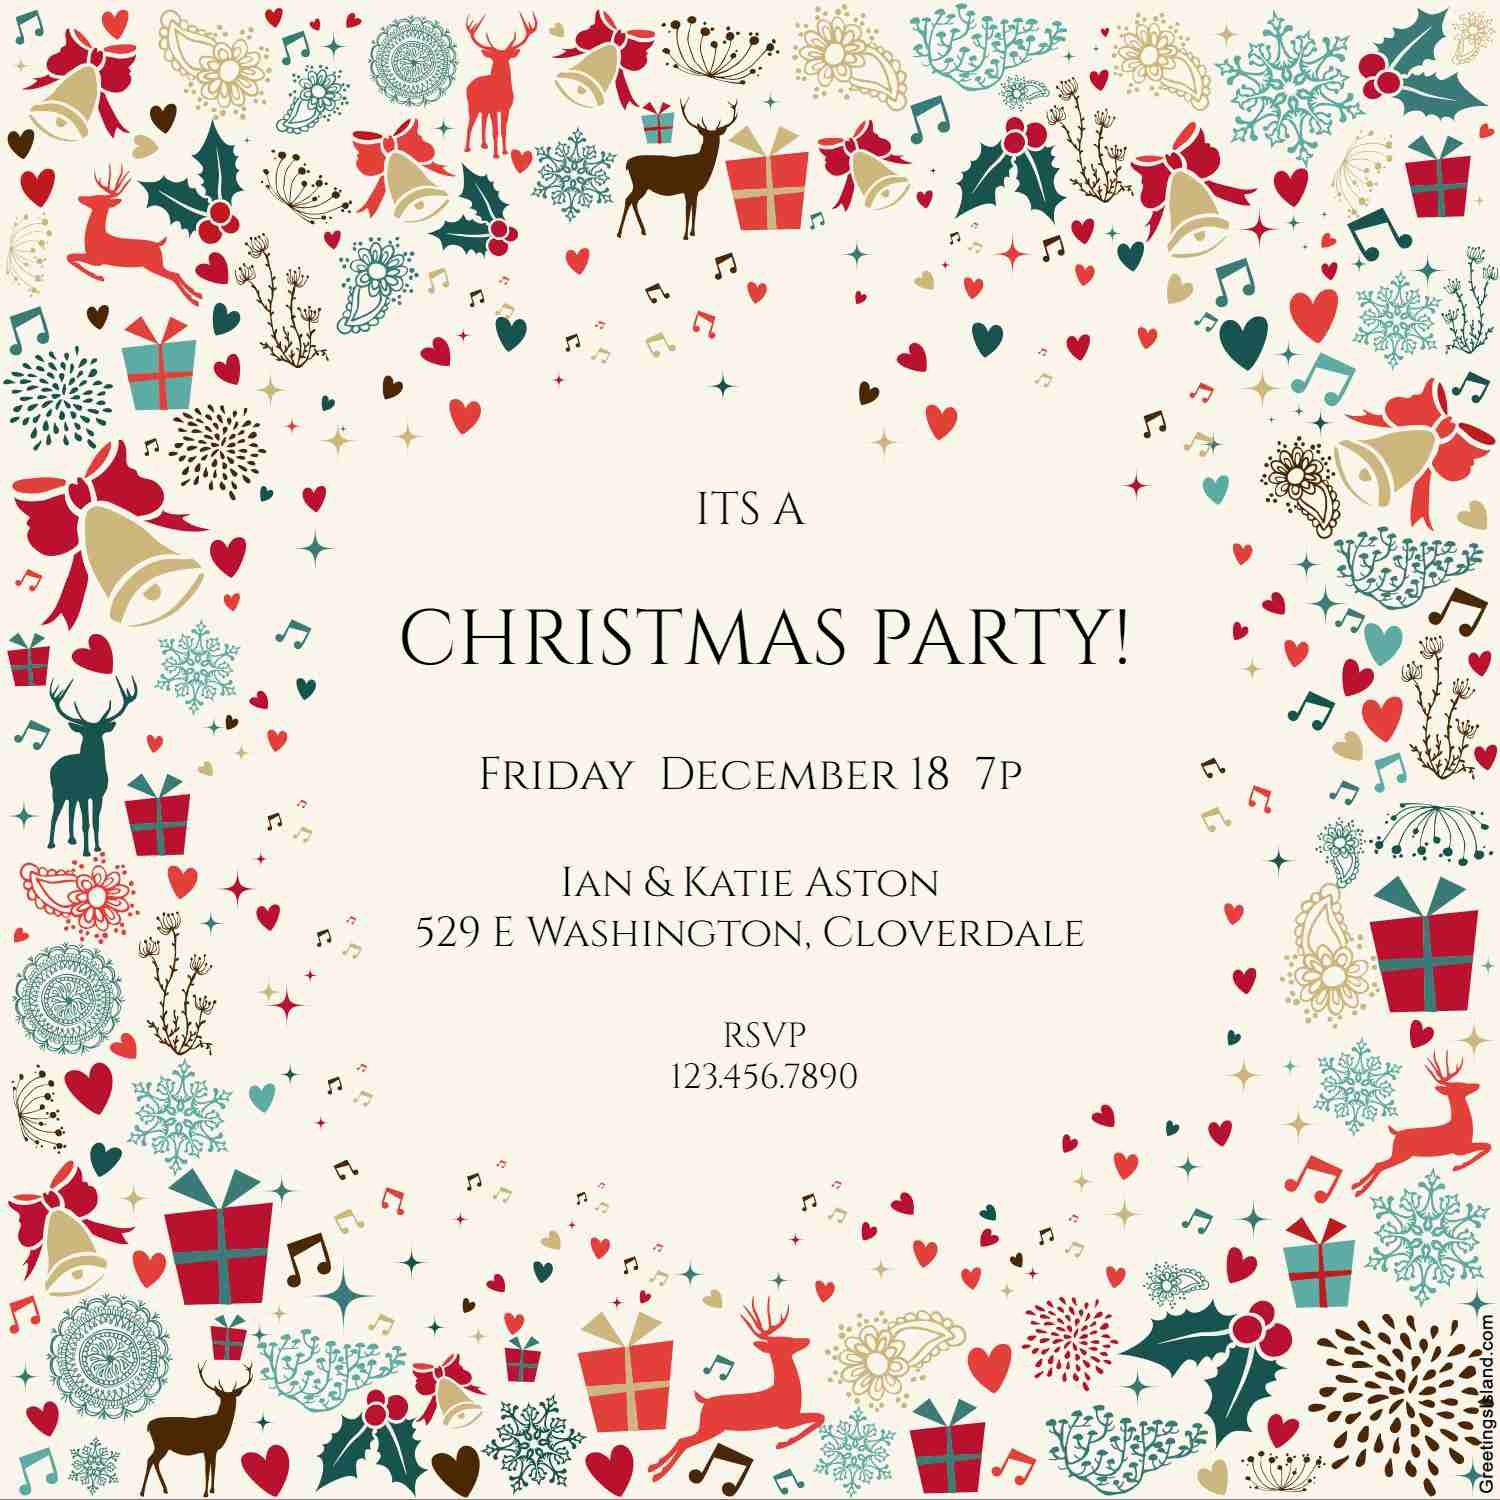 Free Printable Christmas Invitations - Free Printable Christmas Invitations